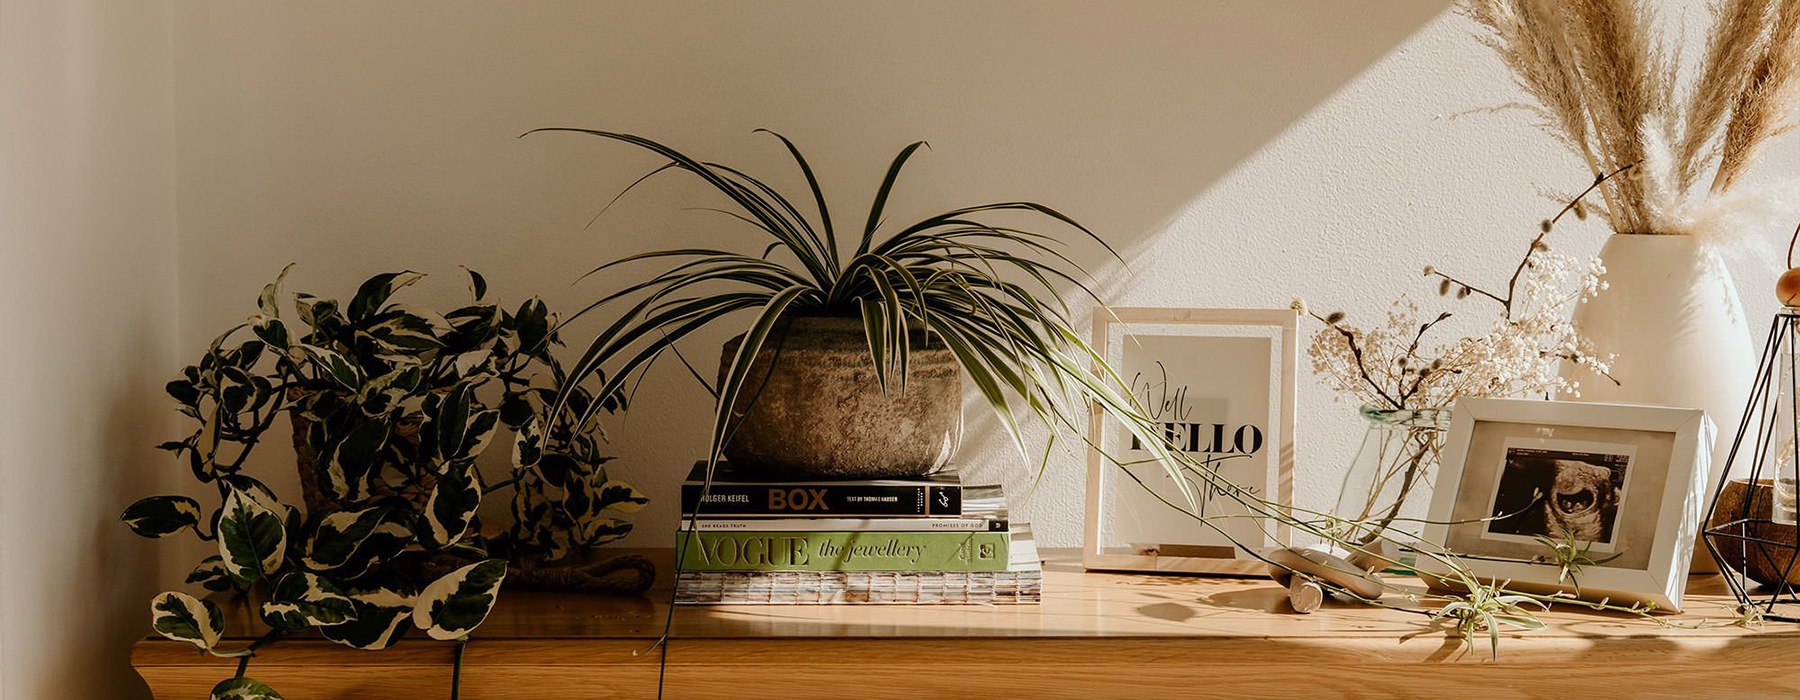 decor on a bookshelf with plants